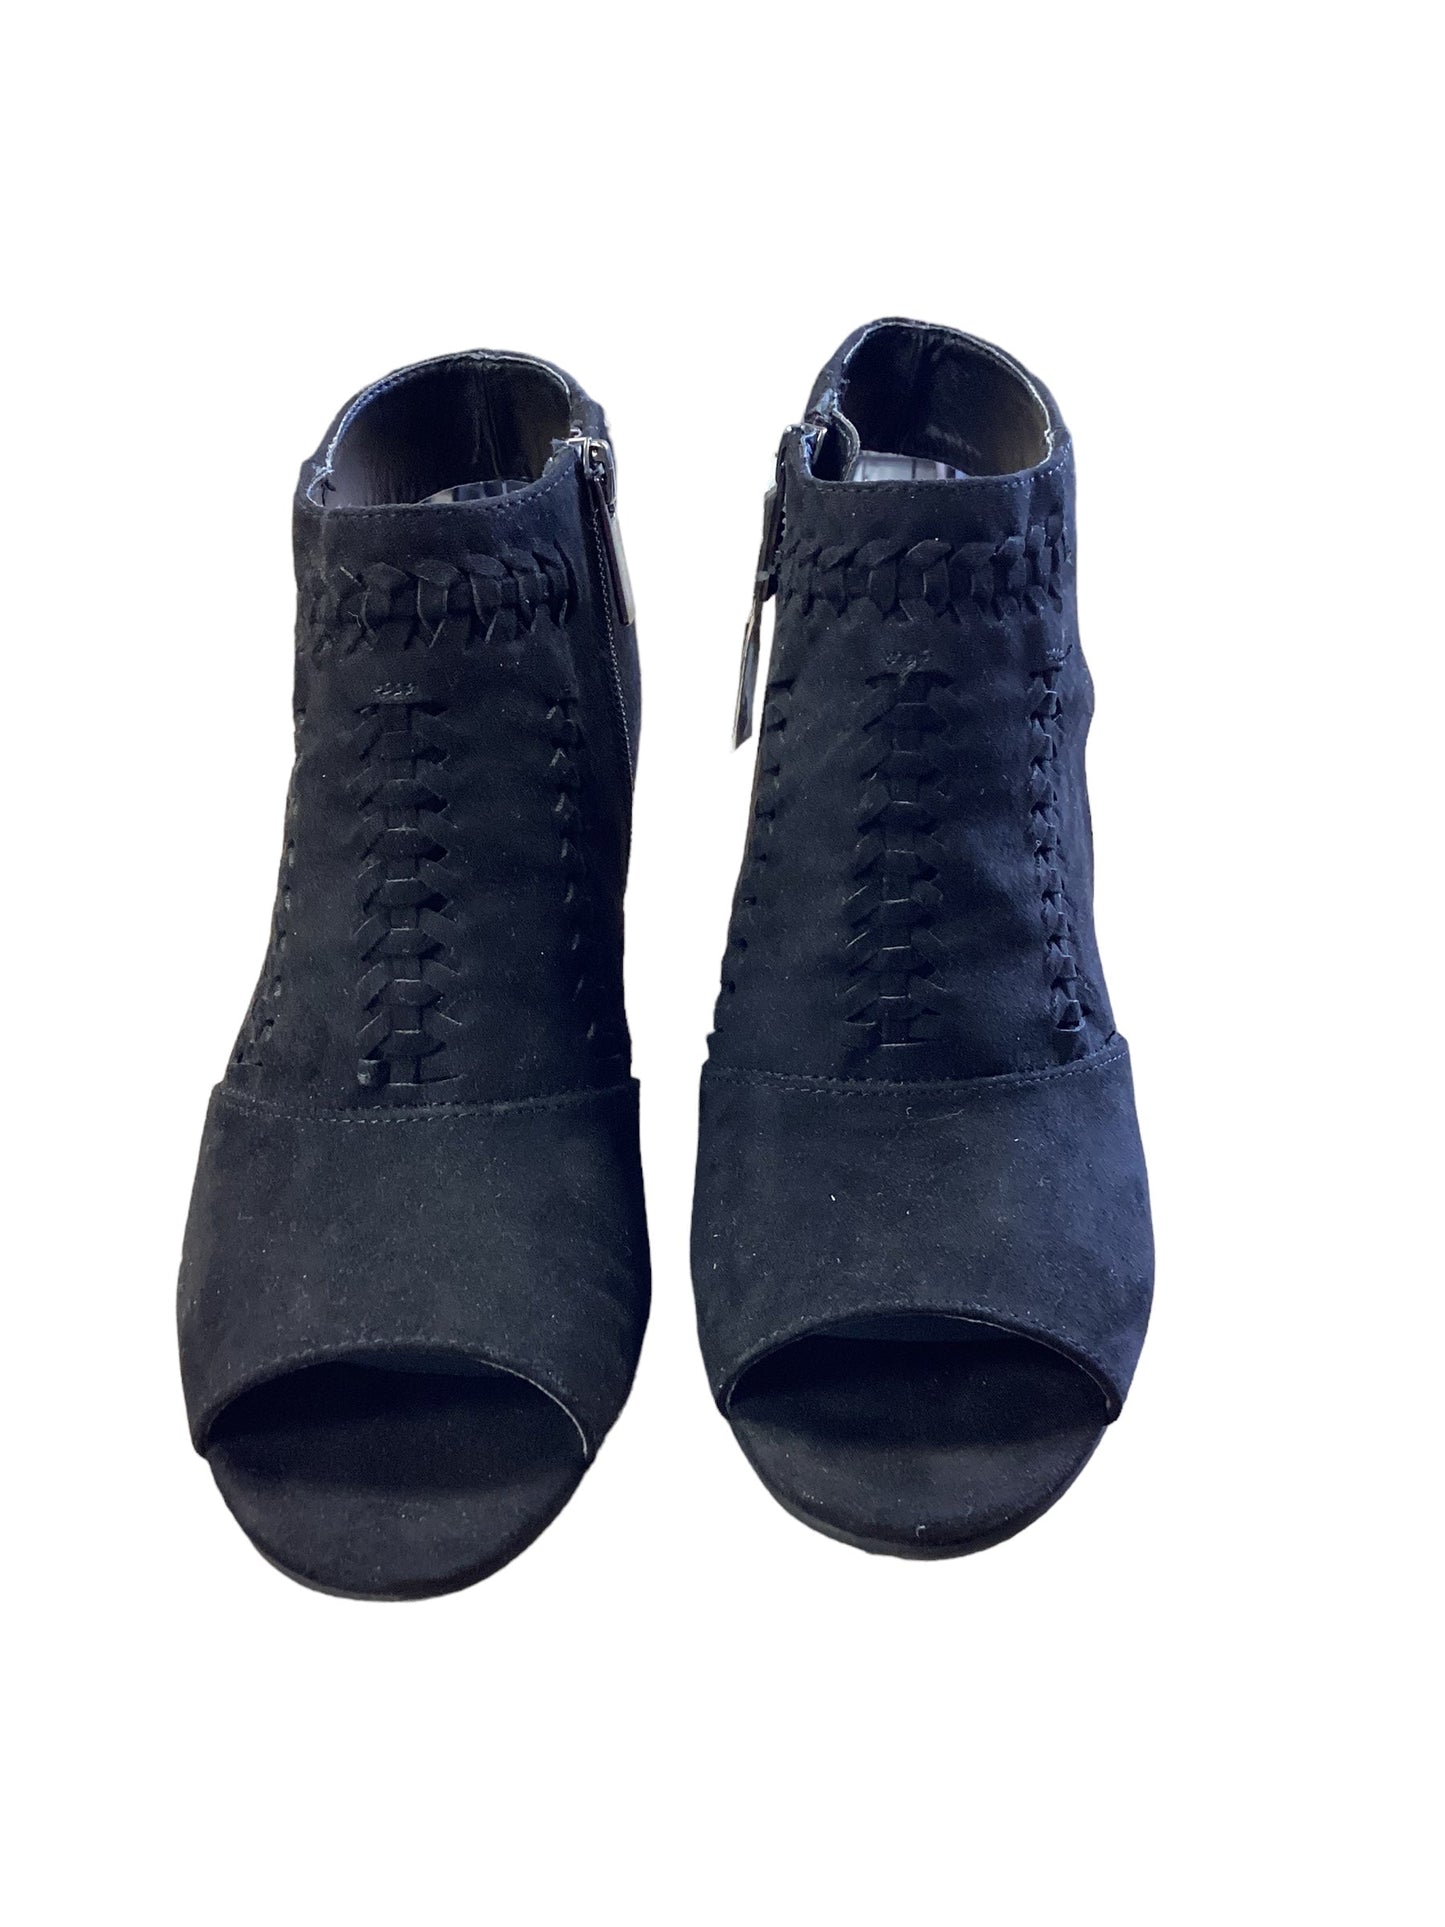 Black Shoes Heels Block Sonoma, Size 9.5